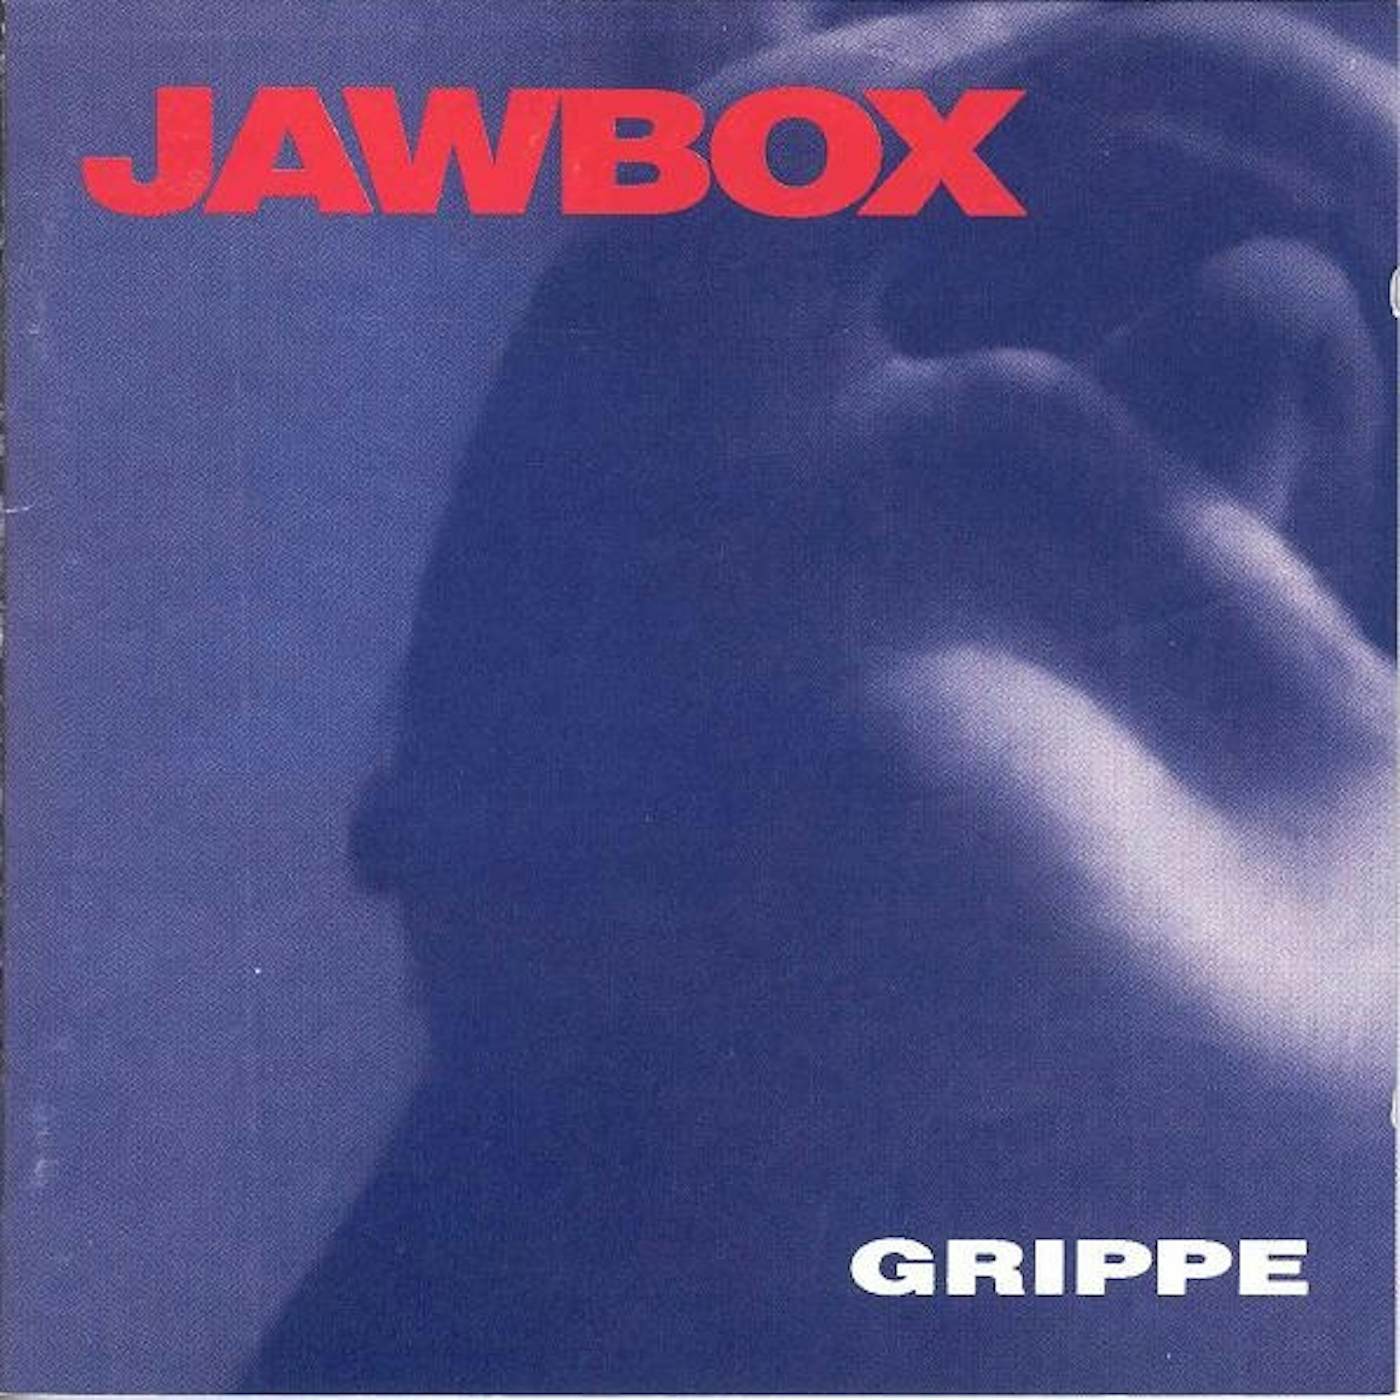 Jawbox Grippe Vinyl Record